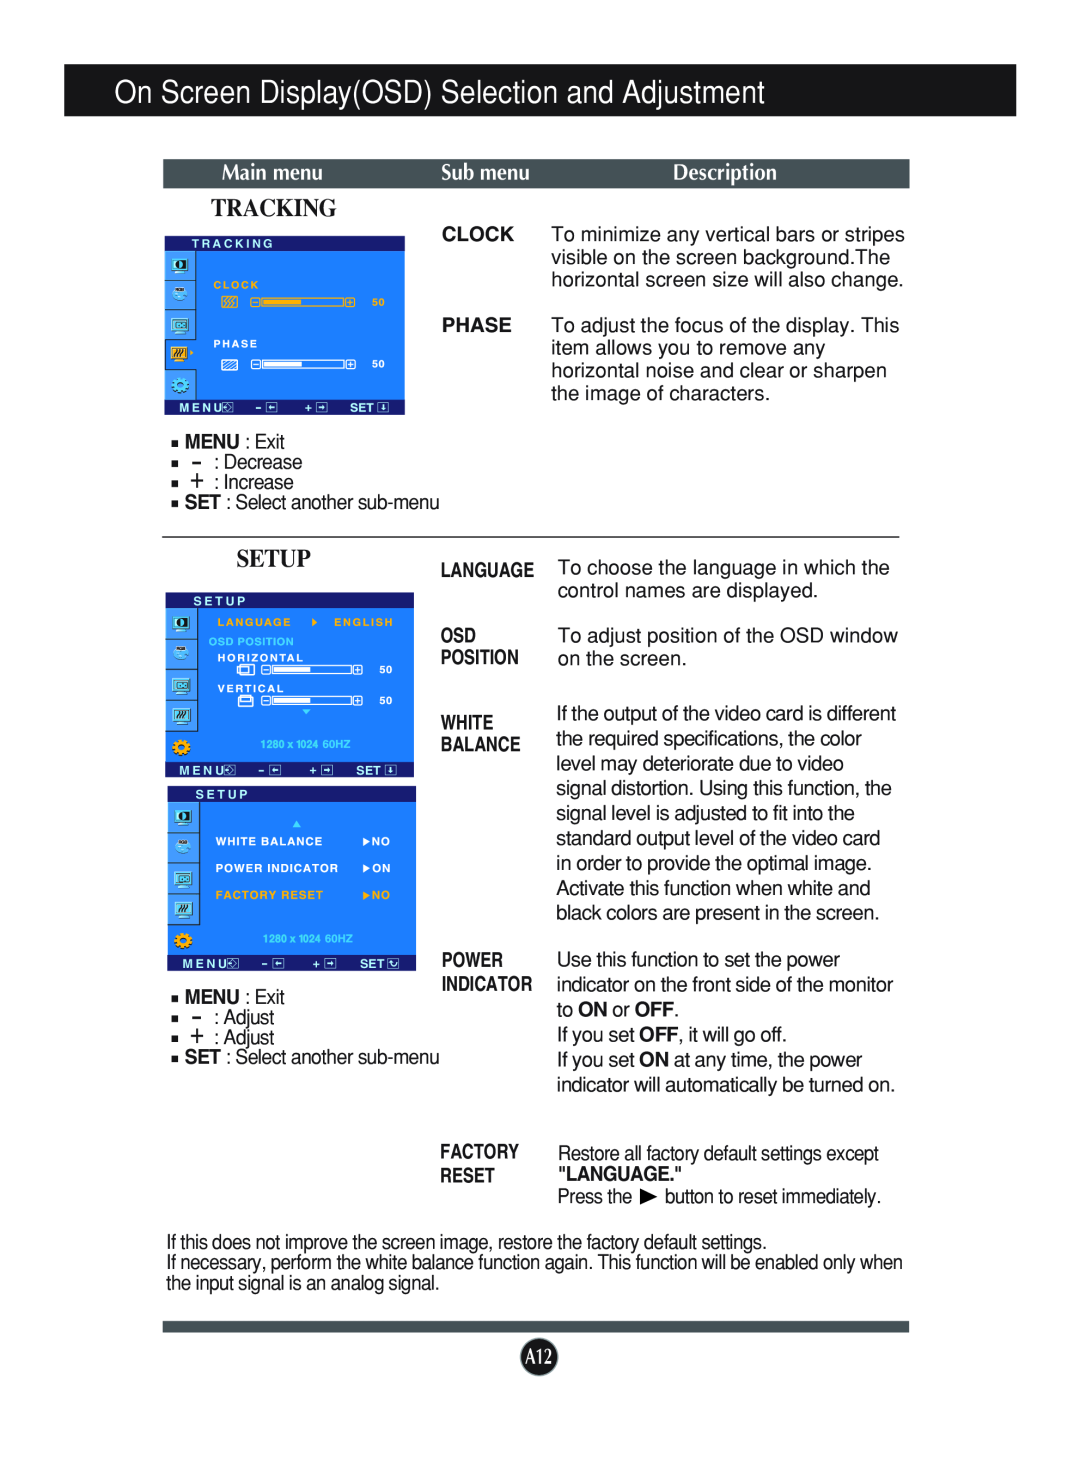 LG Electronics L1740B Tracking, Sub menu, On Screen DisplayOSD Selection and Adjustment, Main menu, Description, MENU Exit 